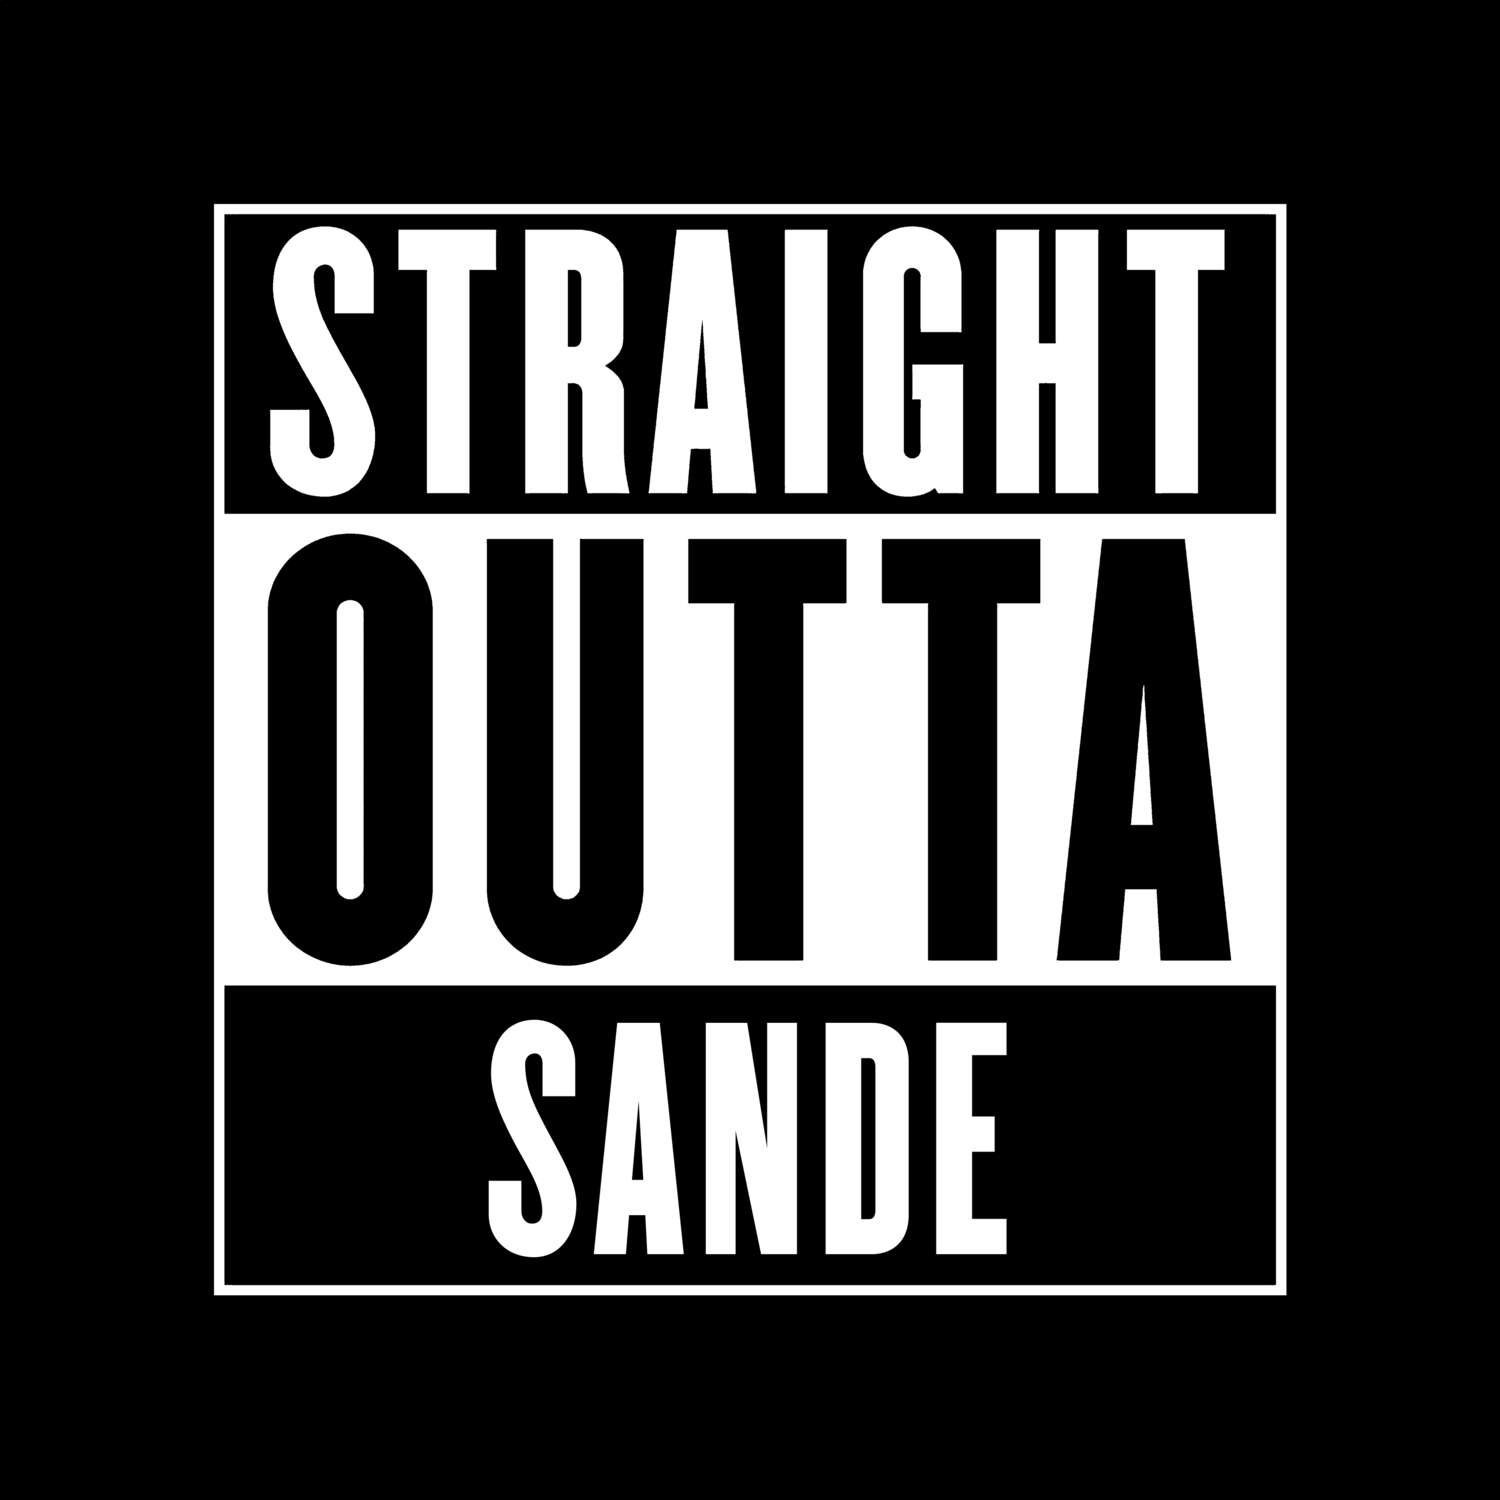 Sande T-Shirt »Straight Outta«